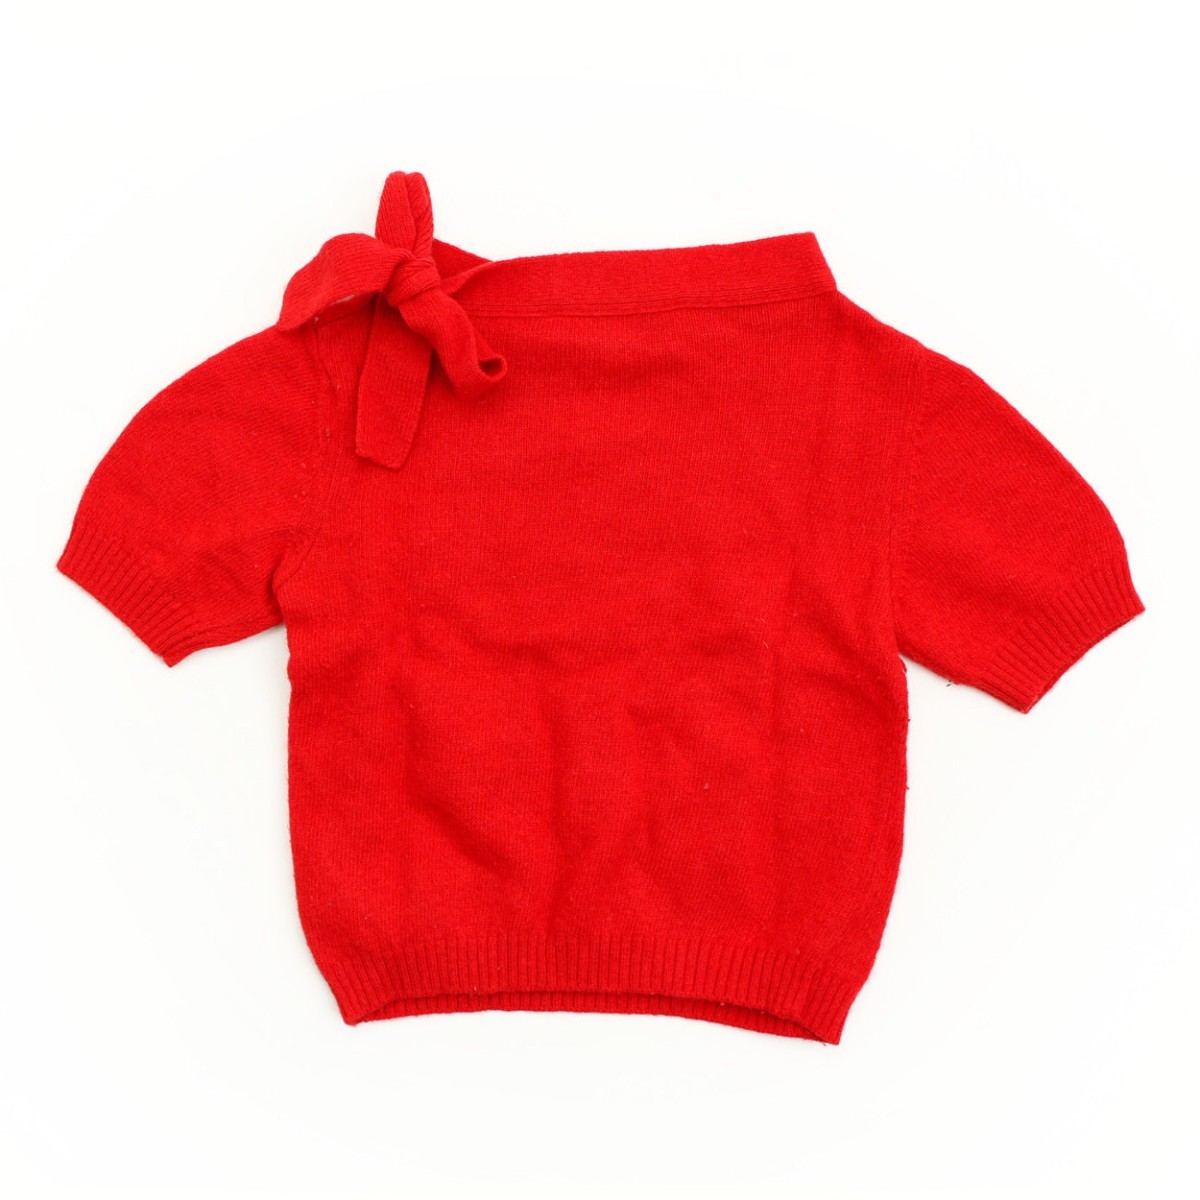 [ Simonetta ]Simonetta Kids ребенок одежда украшен блестками вязаный tops свитер красный 2/92 31298